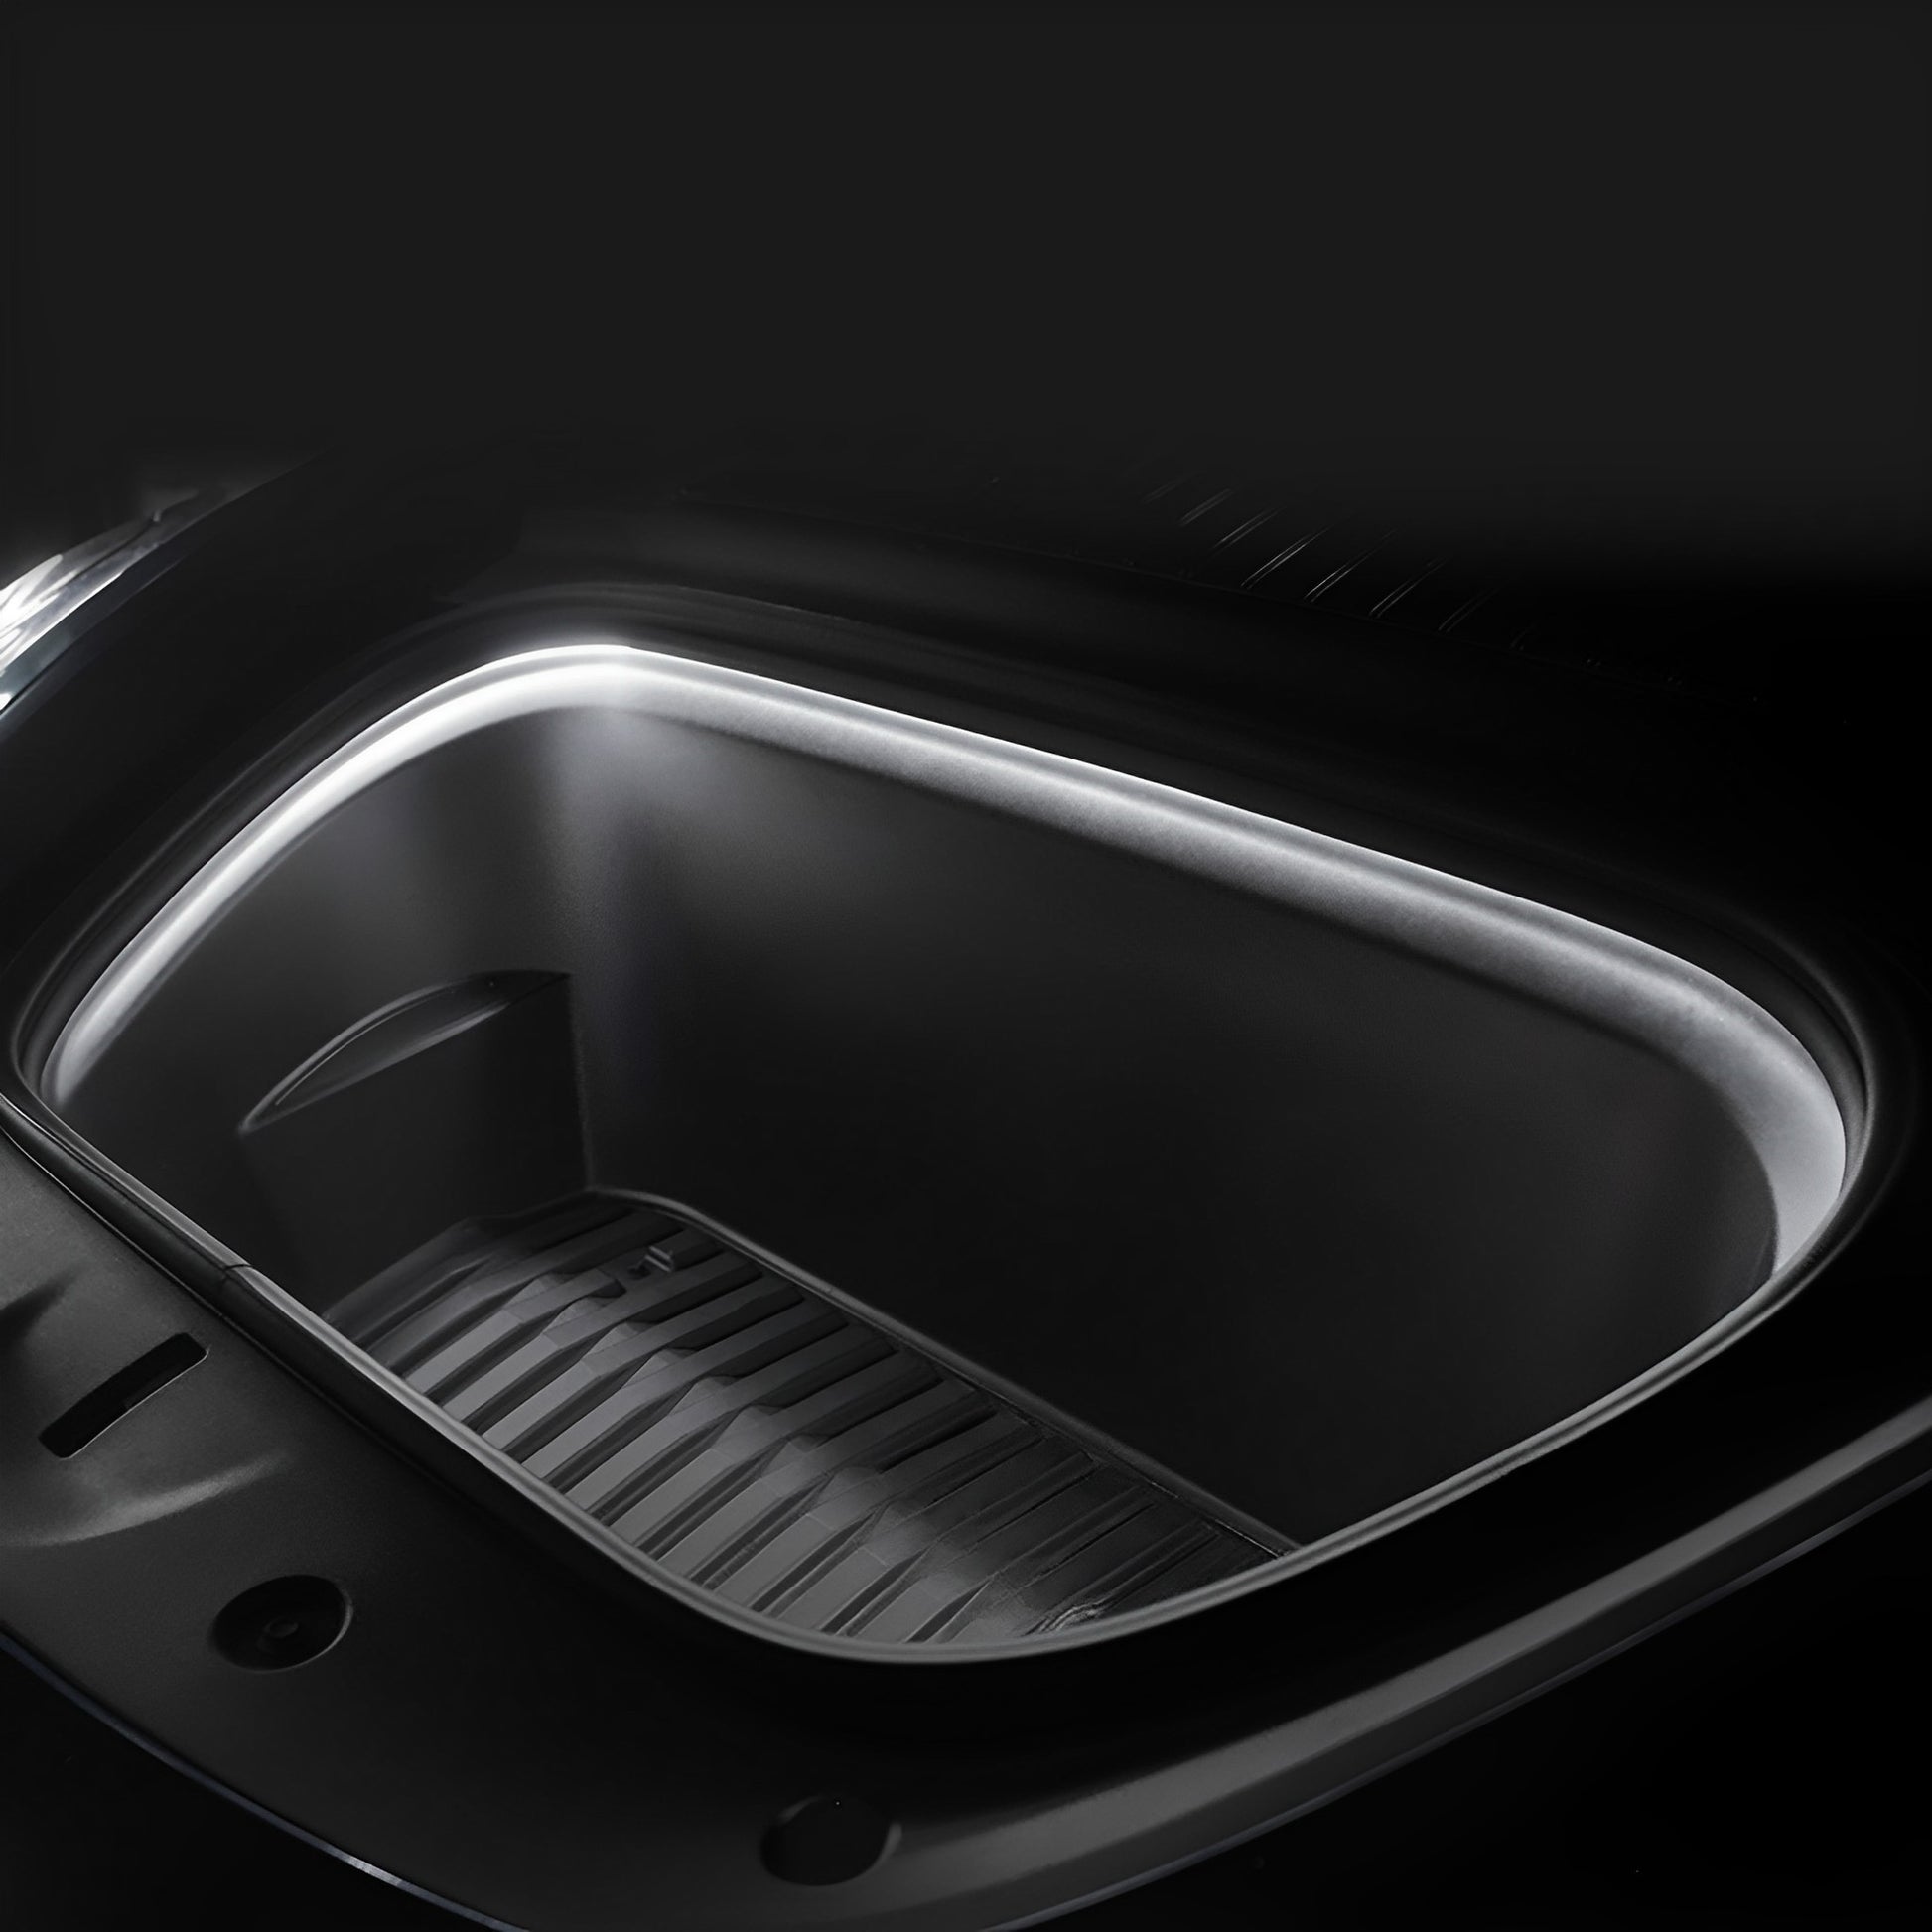 Front Trunk LED Light Strip ambient light For Tesla Model 3 & Y by Yeslak